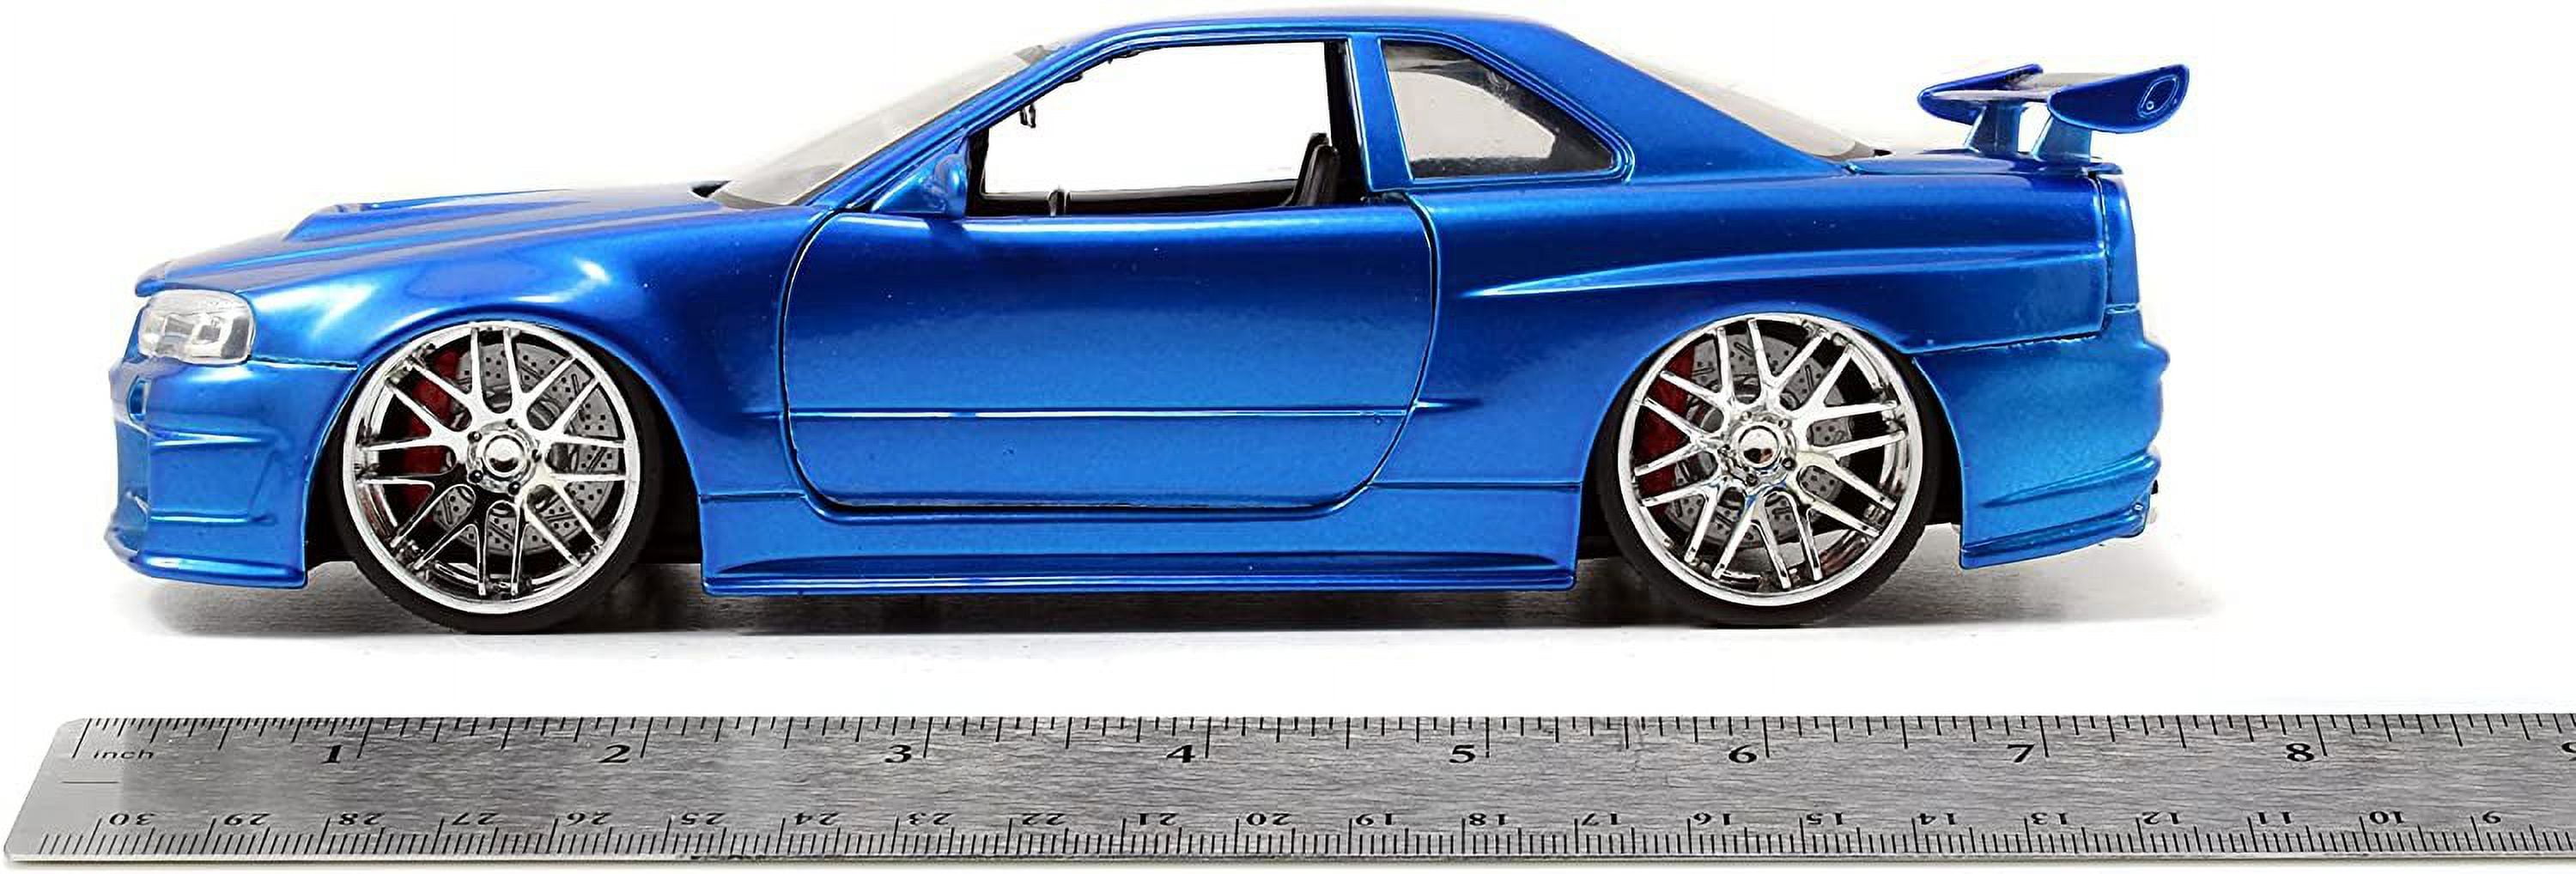  Jada Toys Fast & Furious Brian's 2002 Nissan Skyline R34  Die-cast Car, 1:24 Scale, Silver & Blue : Toys & Games